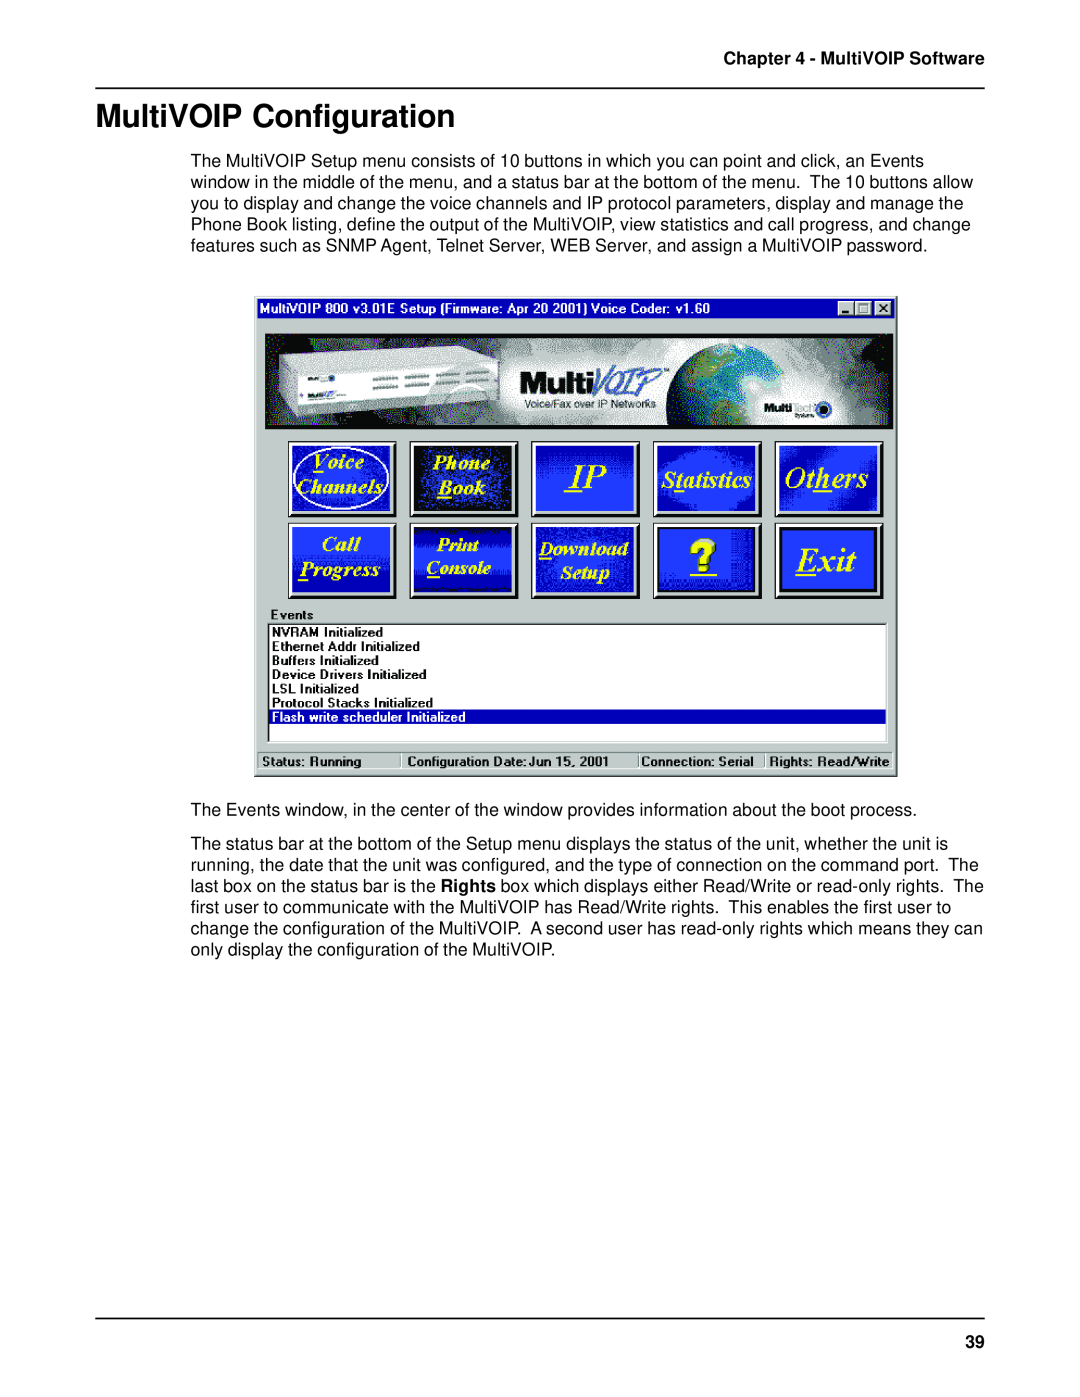 Multi-Tech Systems MVP 800 manual MultiVOIP Configuration, MultiVOIP Software 